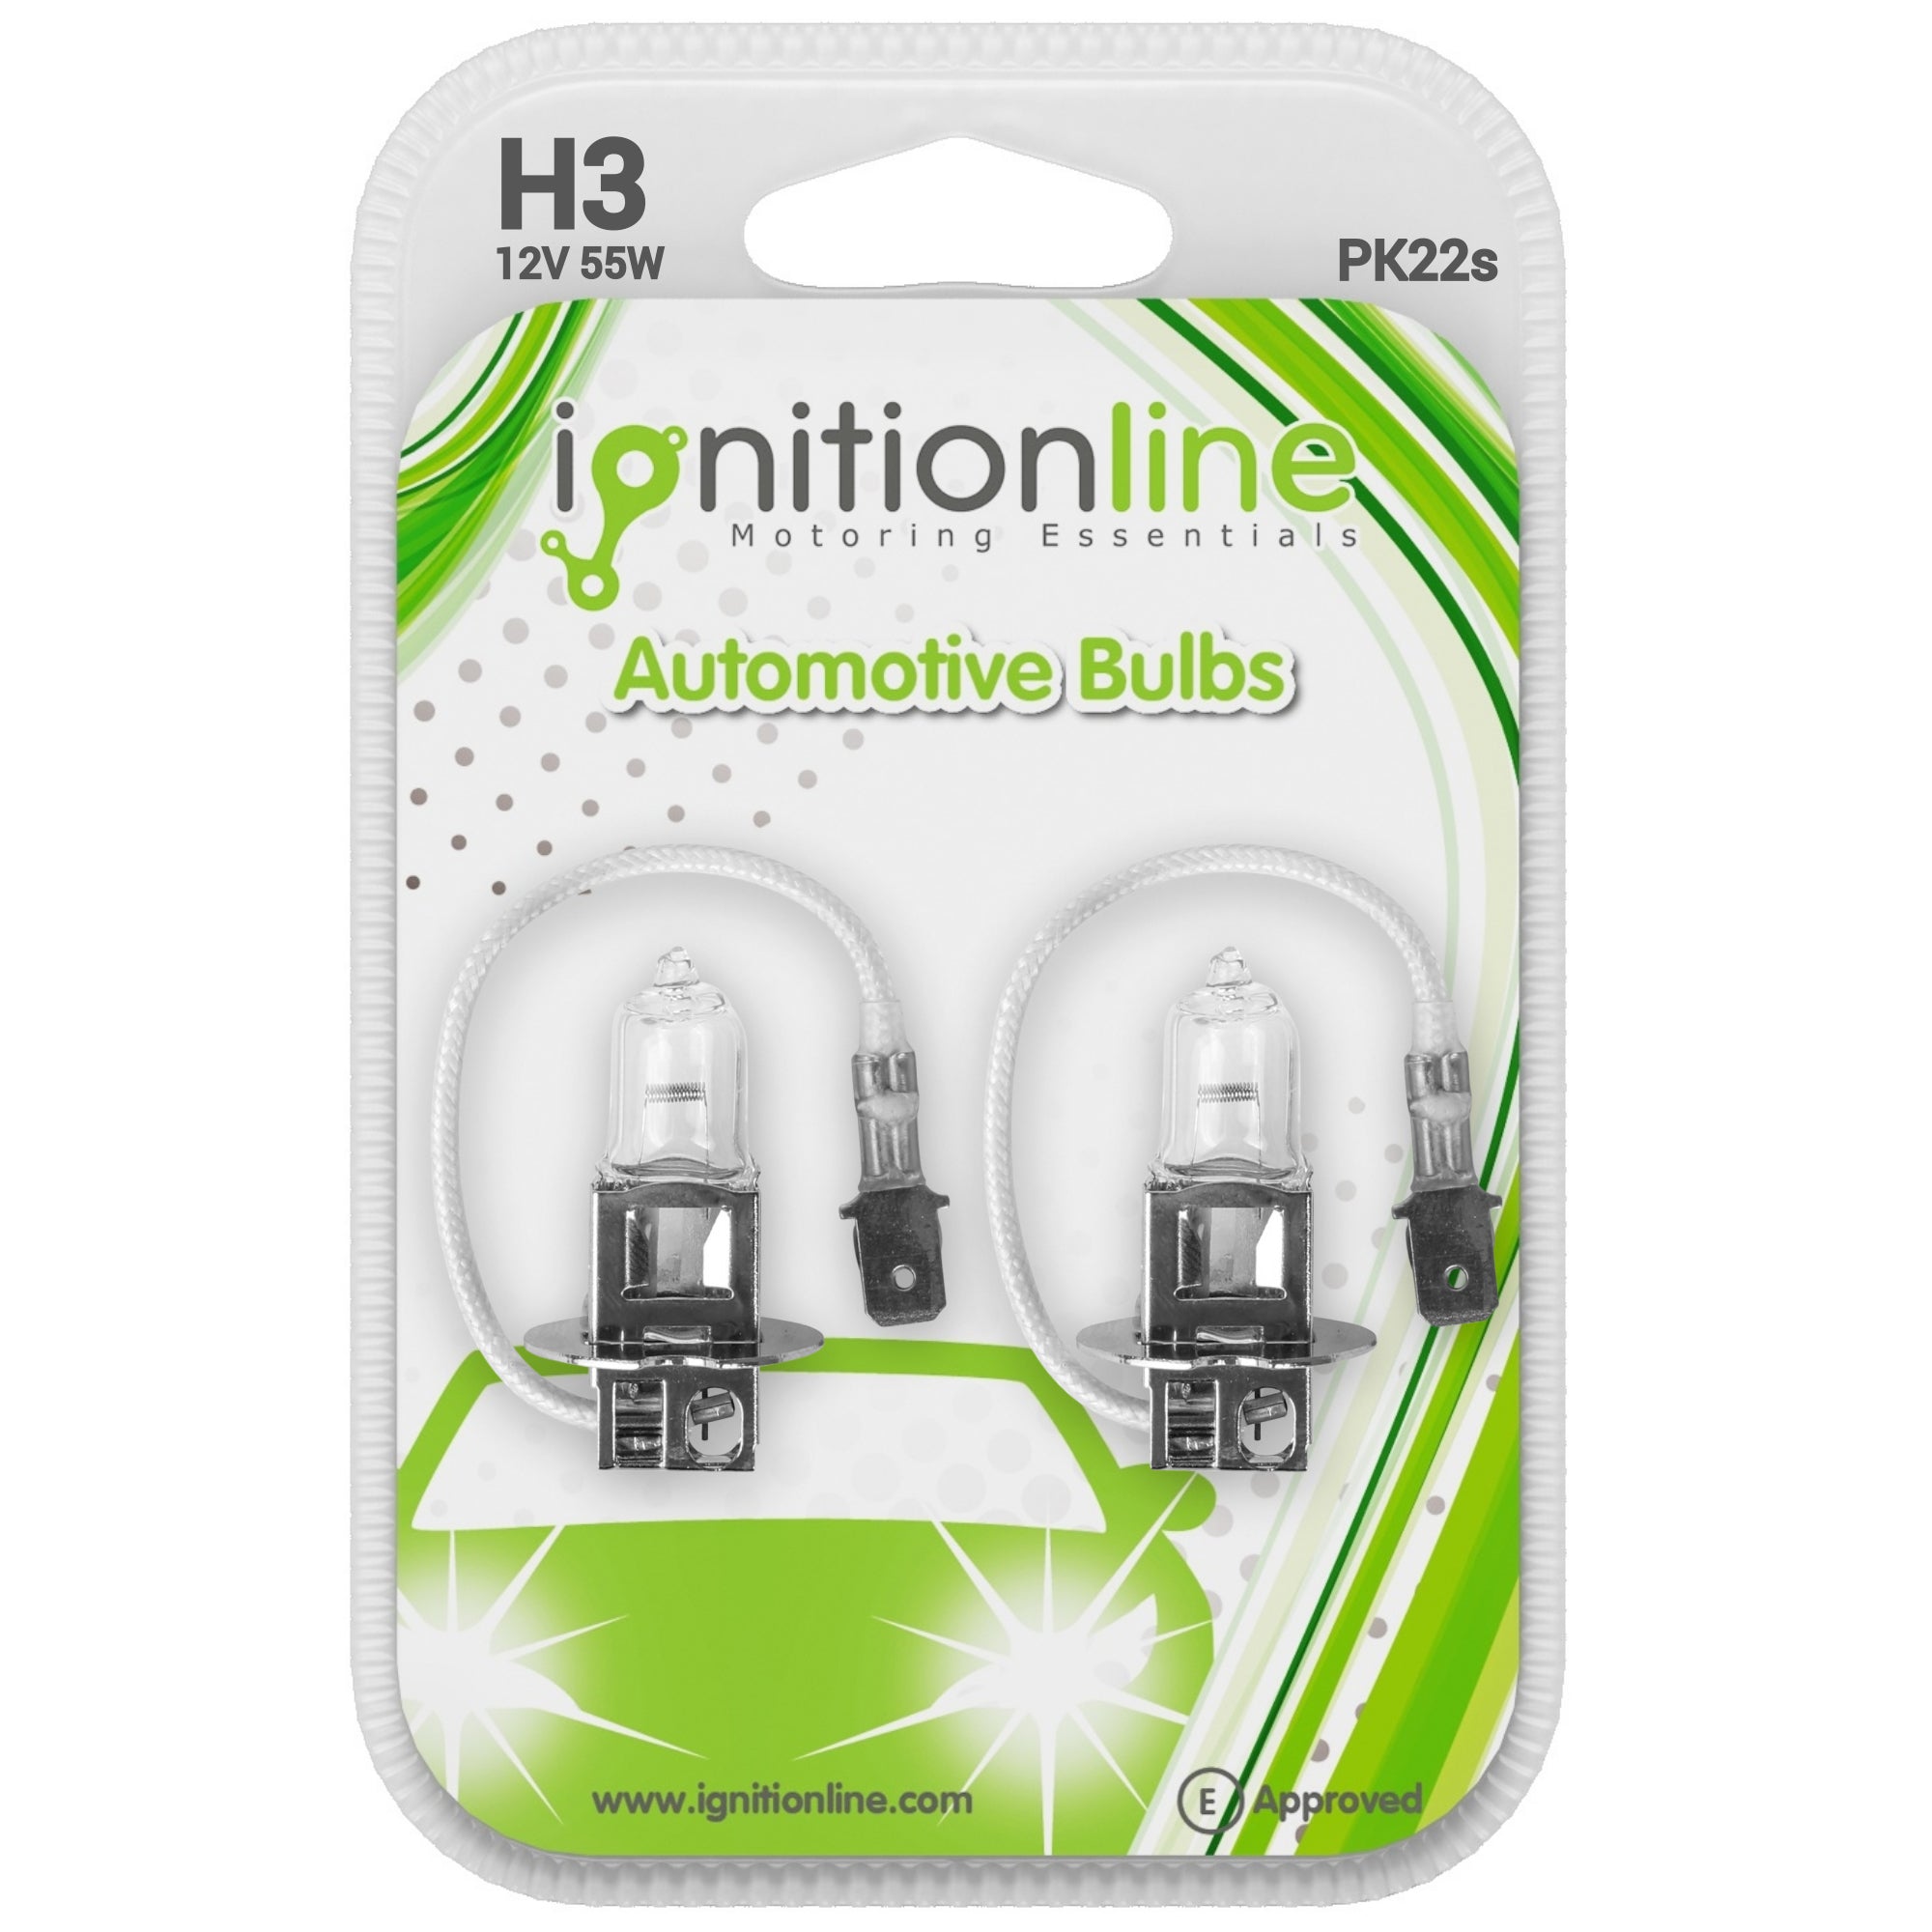 Ignitionline H3 12V 55W Halogen Headlight Bulbs (Twin Pack)